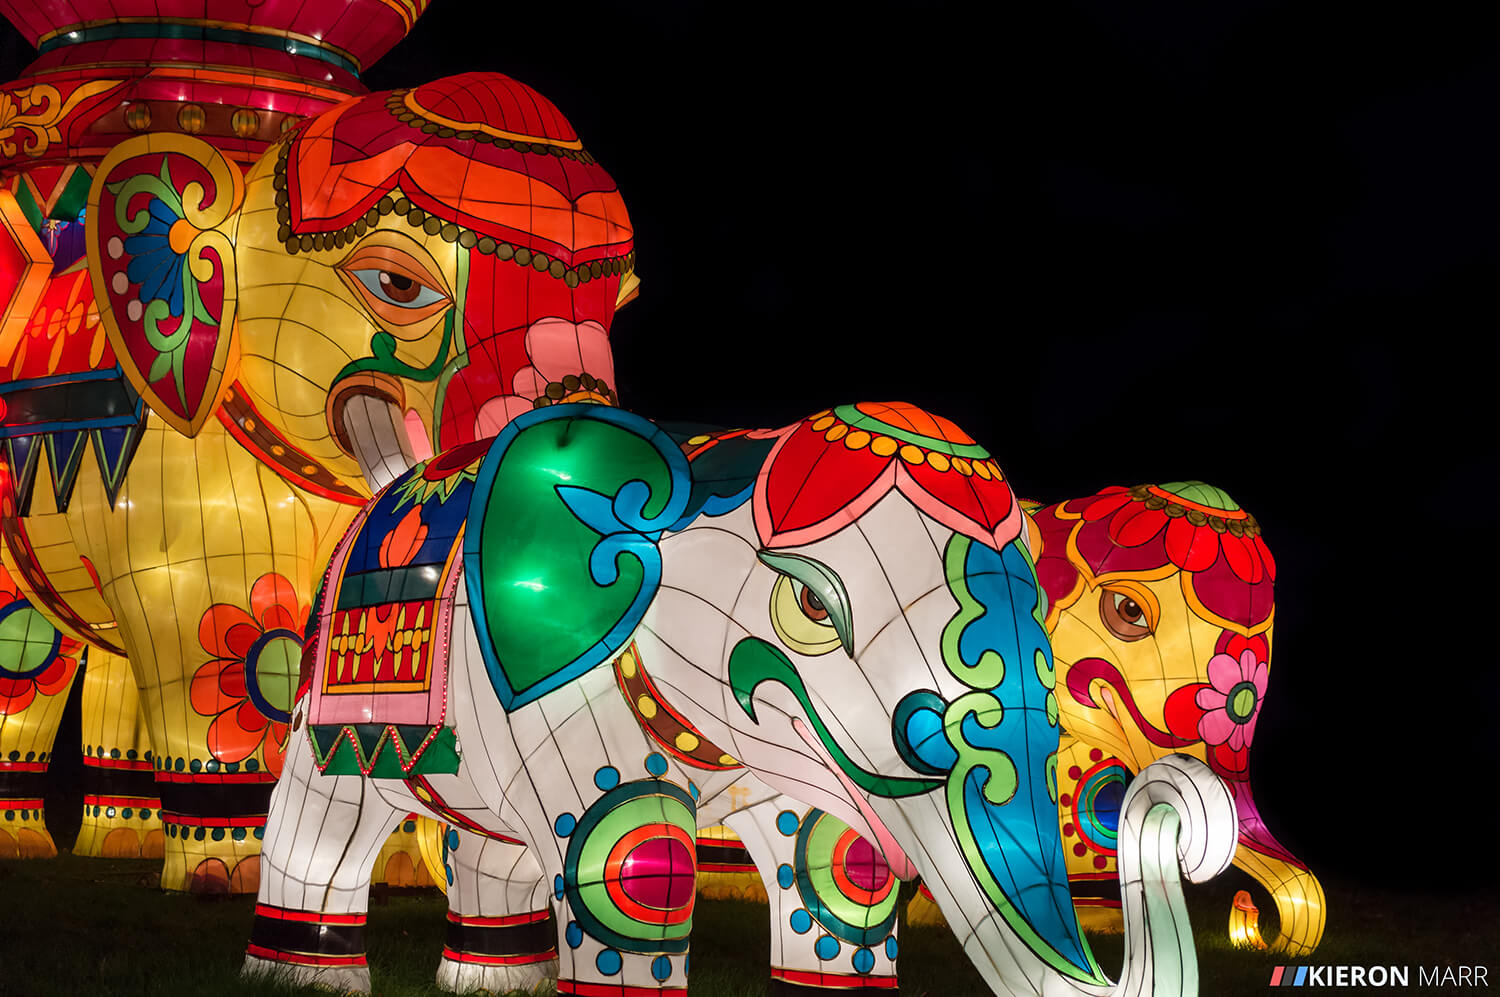 Longleat Festival of Light 2014 - Illuminated Elephants